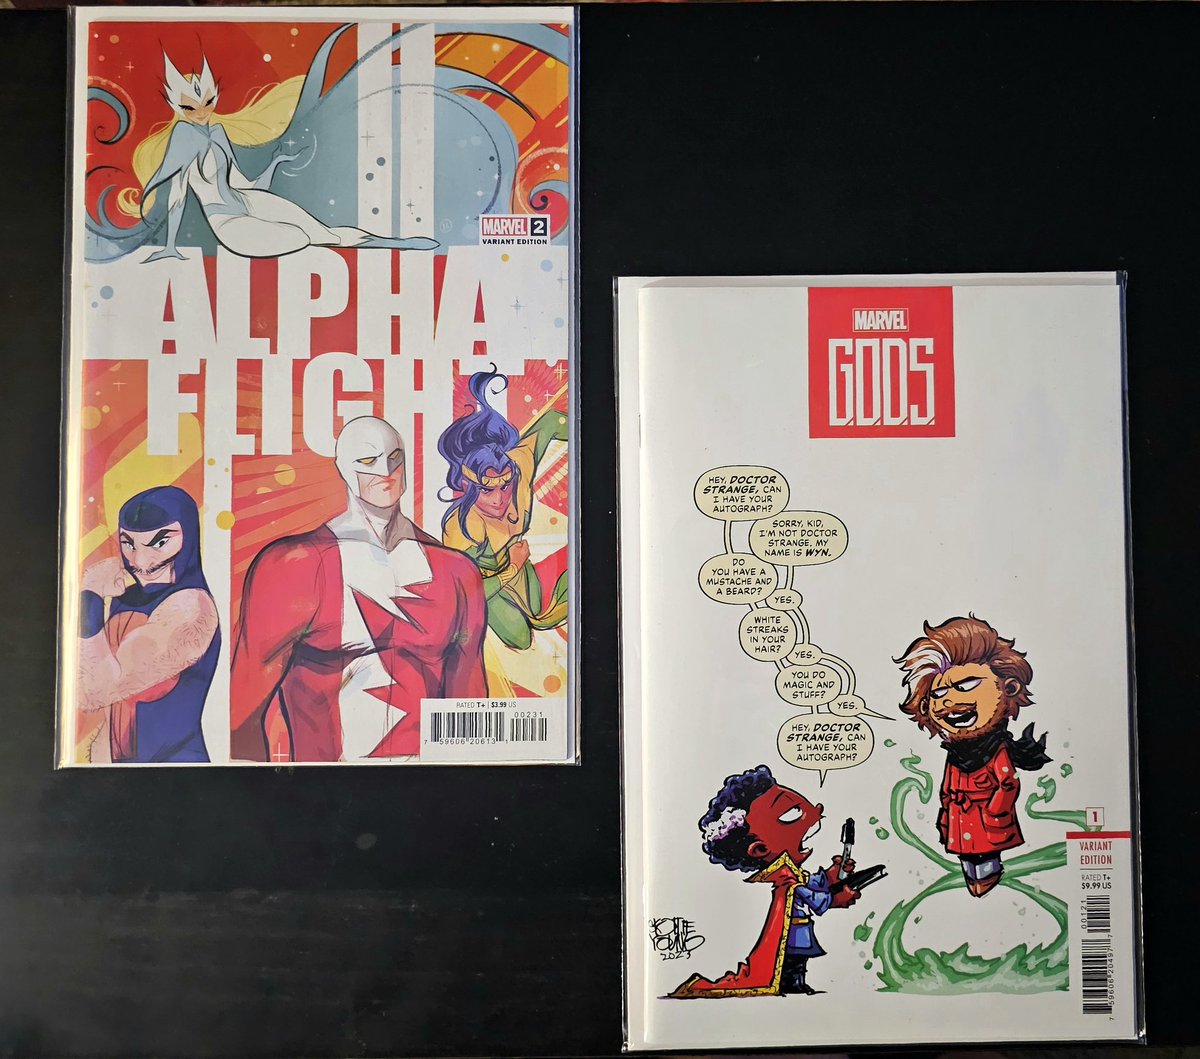 That issue is on my reading list this weekend. #MarvelComics #MarvelFan4Life #ComicBookNerd 🤓 #MarvelGODS #AlphaFlight 🇨🇦